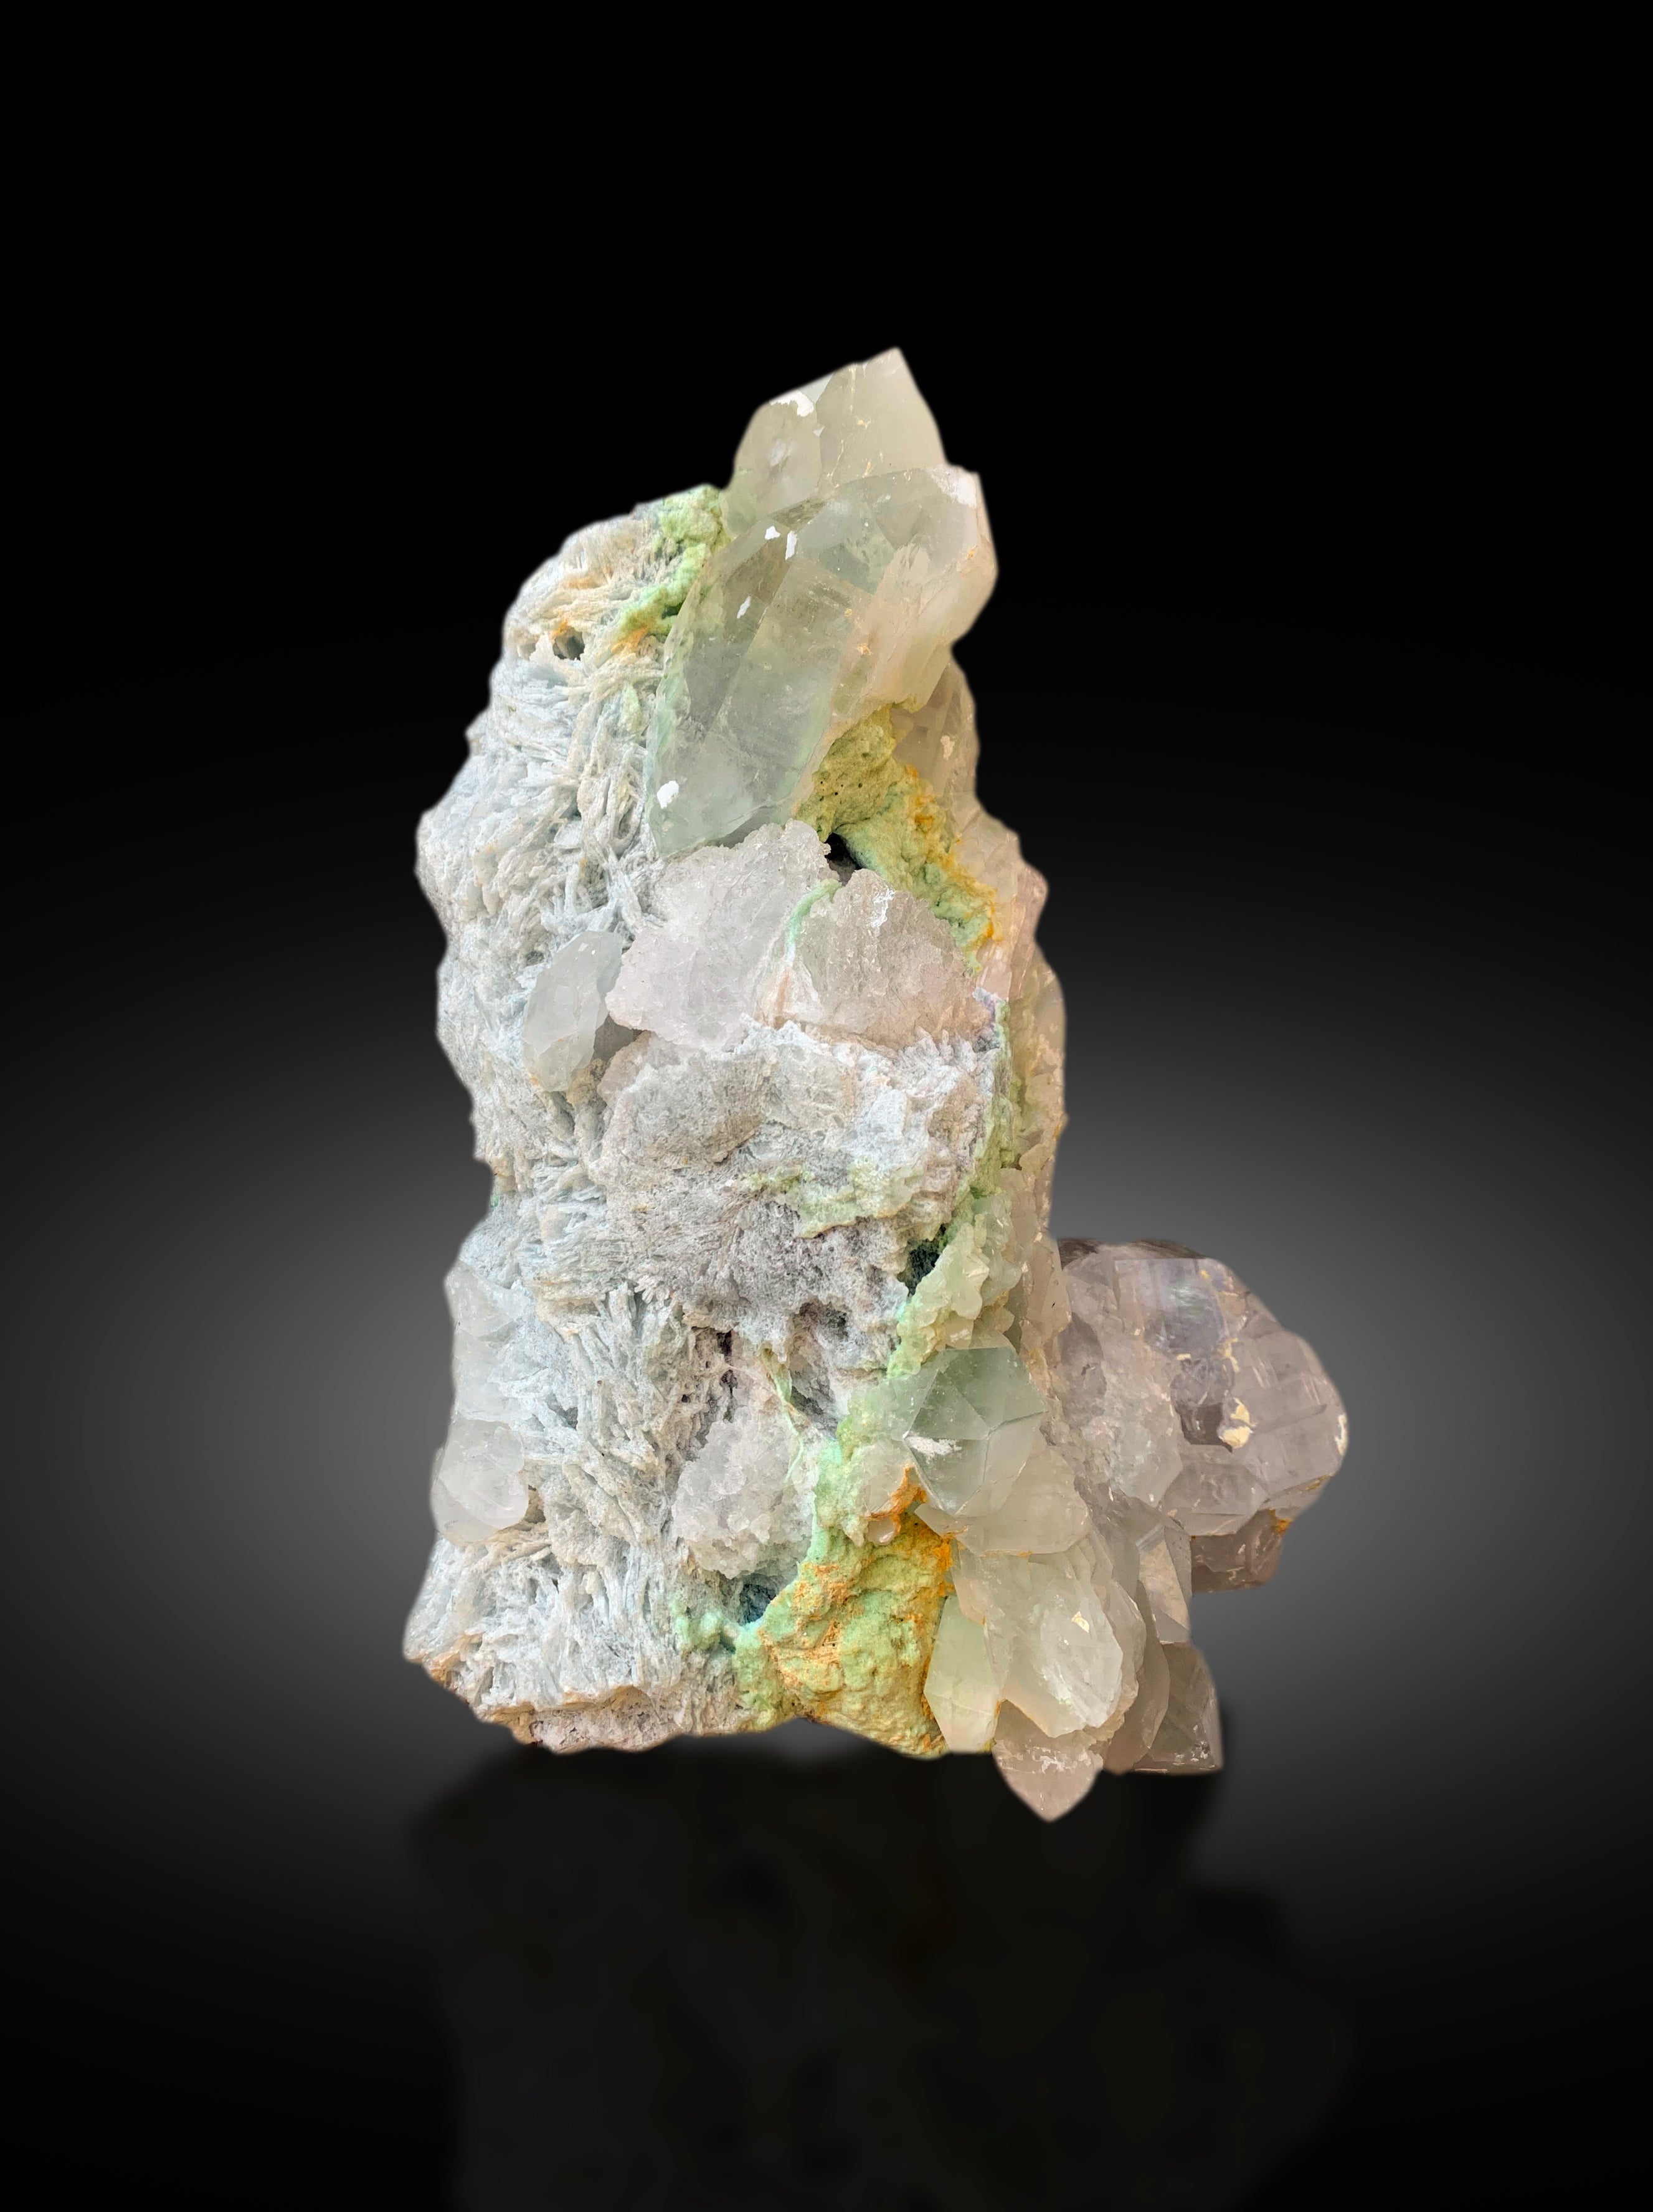 Natural Pink Kunzite Crystals with Rare Pollucite, Tourmalines and Quartz, Museum Grade Kunzite Specimen - 6.4 Kg